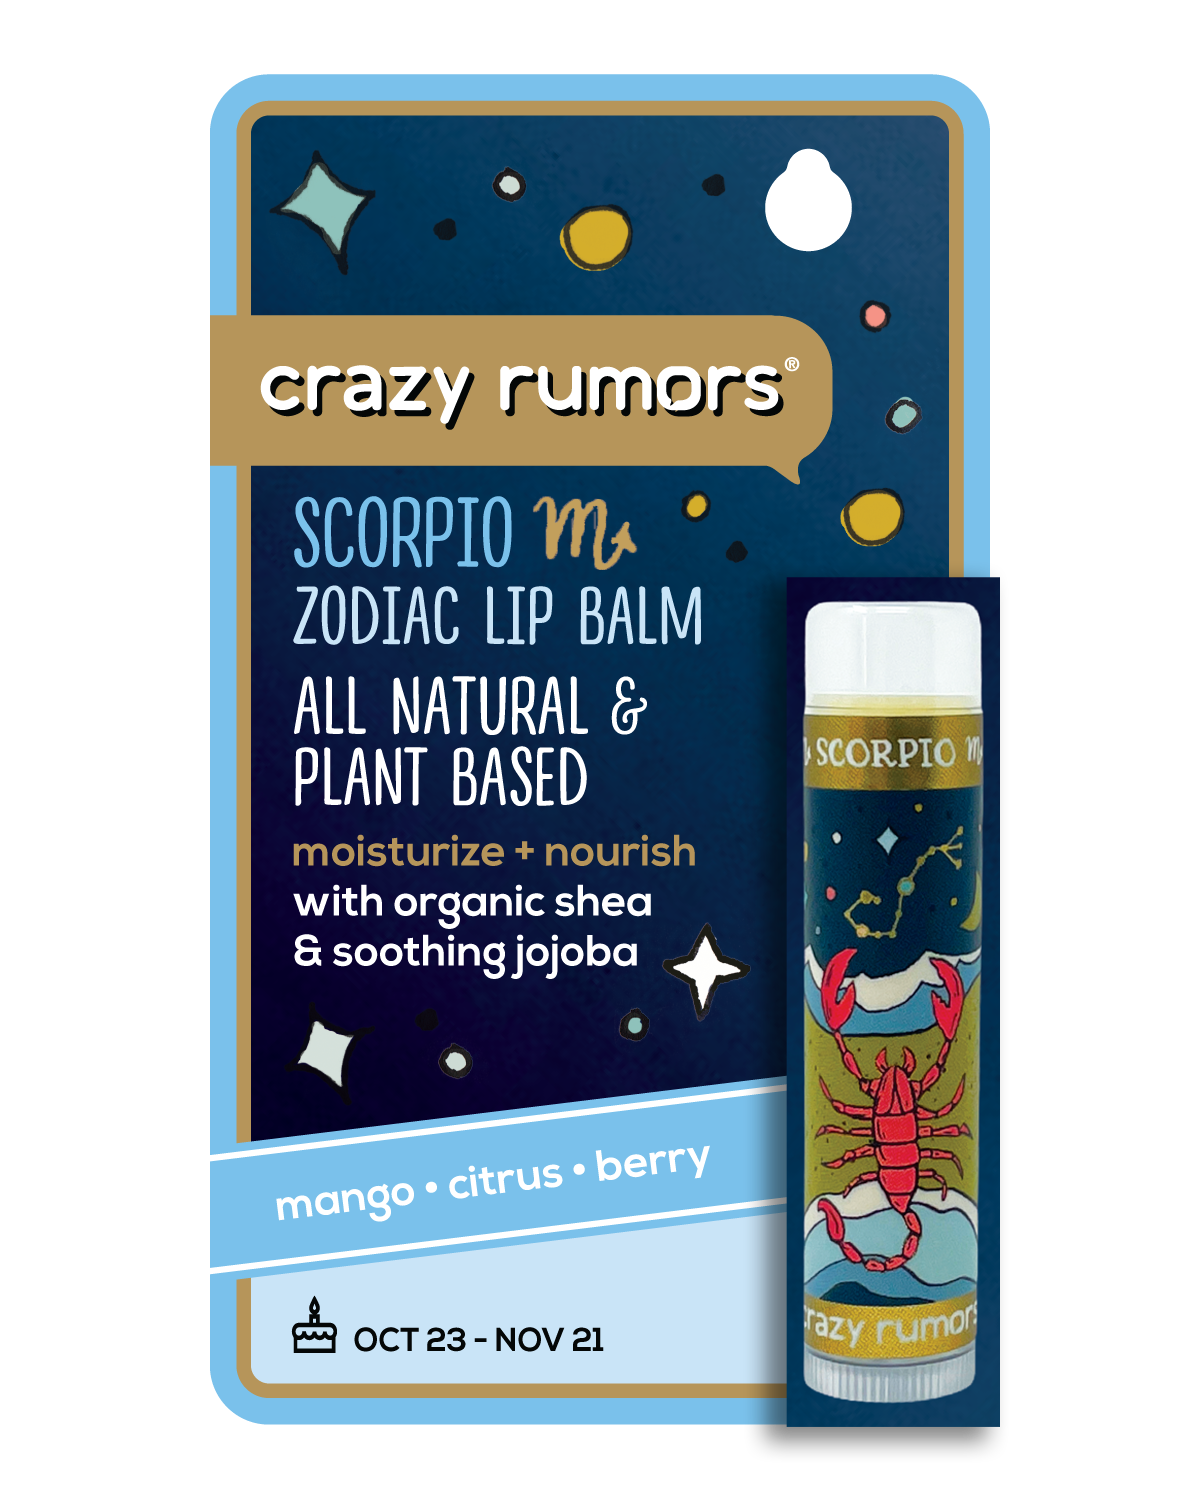 Crazy Rumors - Scorpio, Zodiac Lip Balm